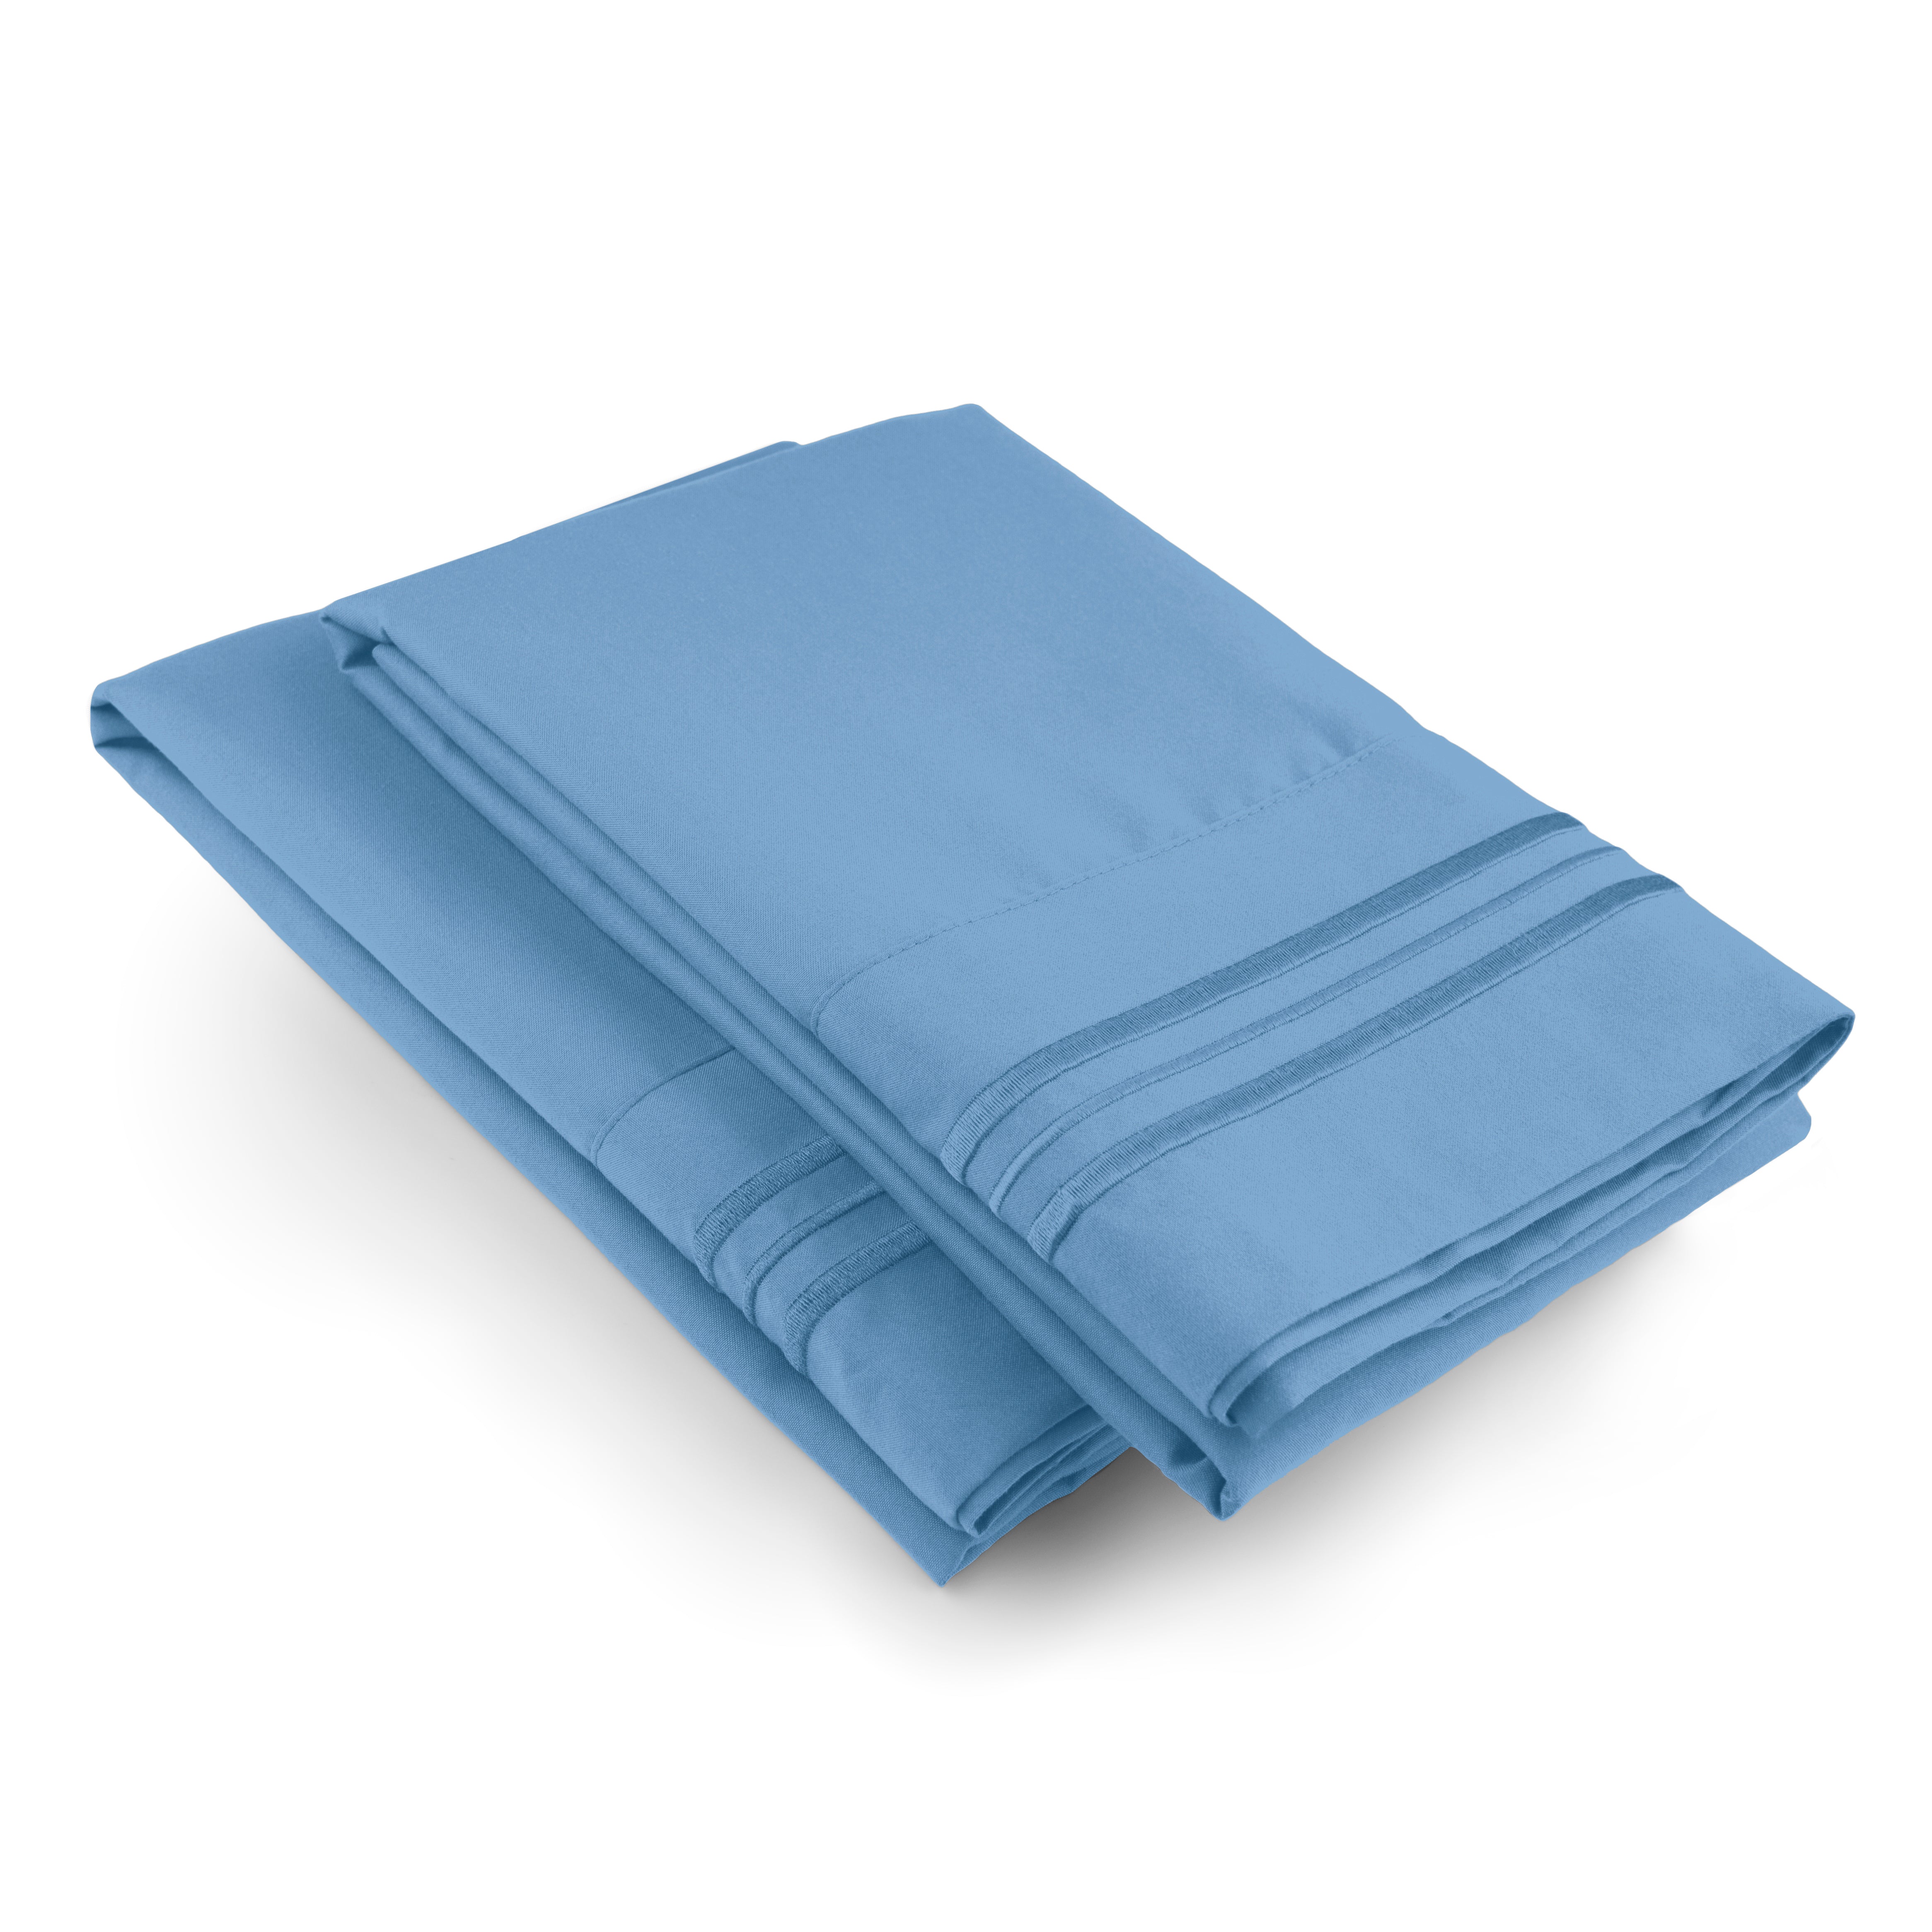 tes 2 Pillowcase Set - Denim Blue